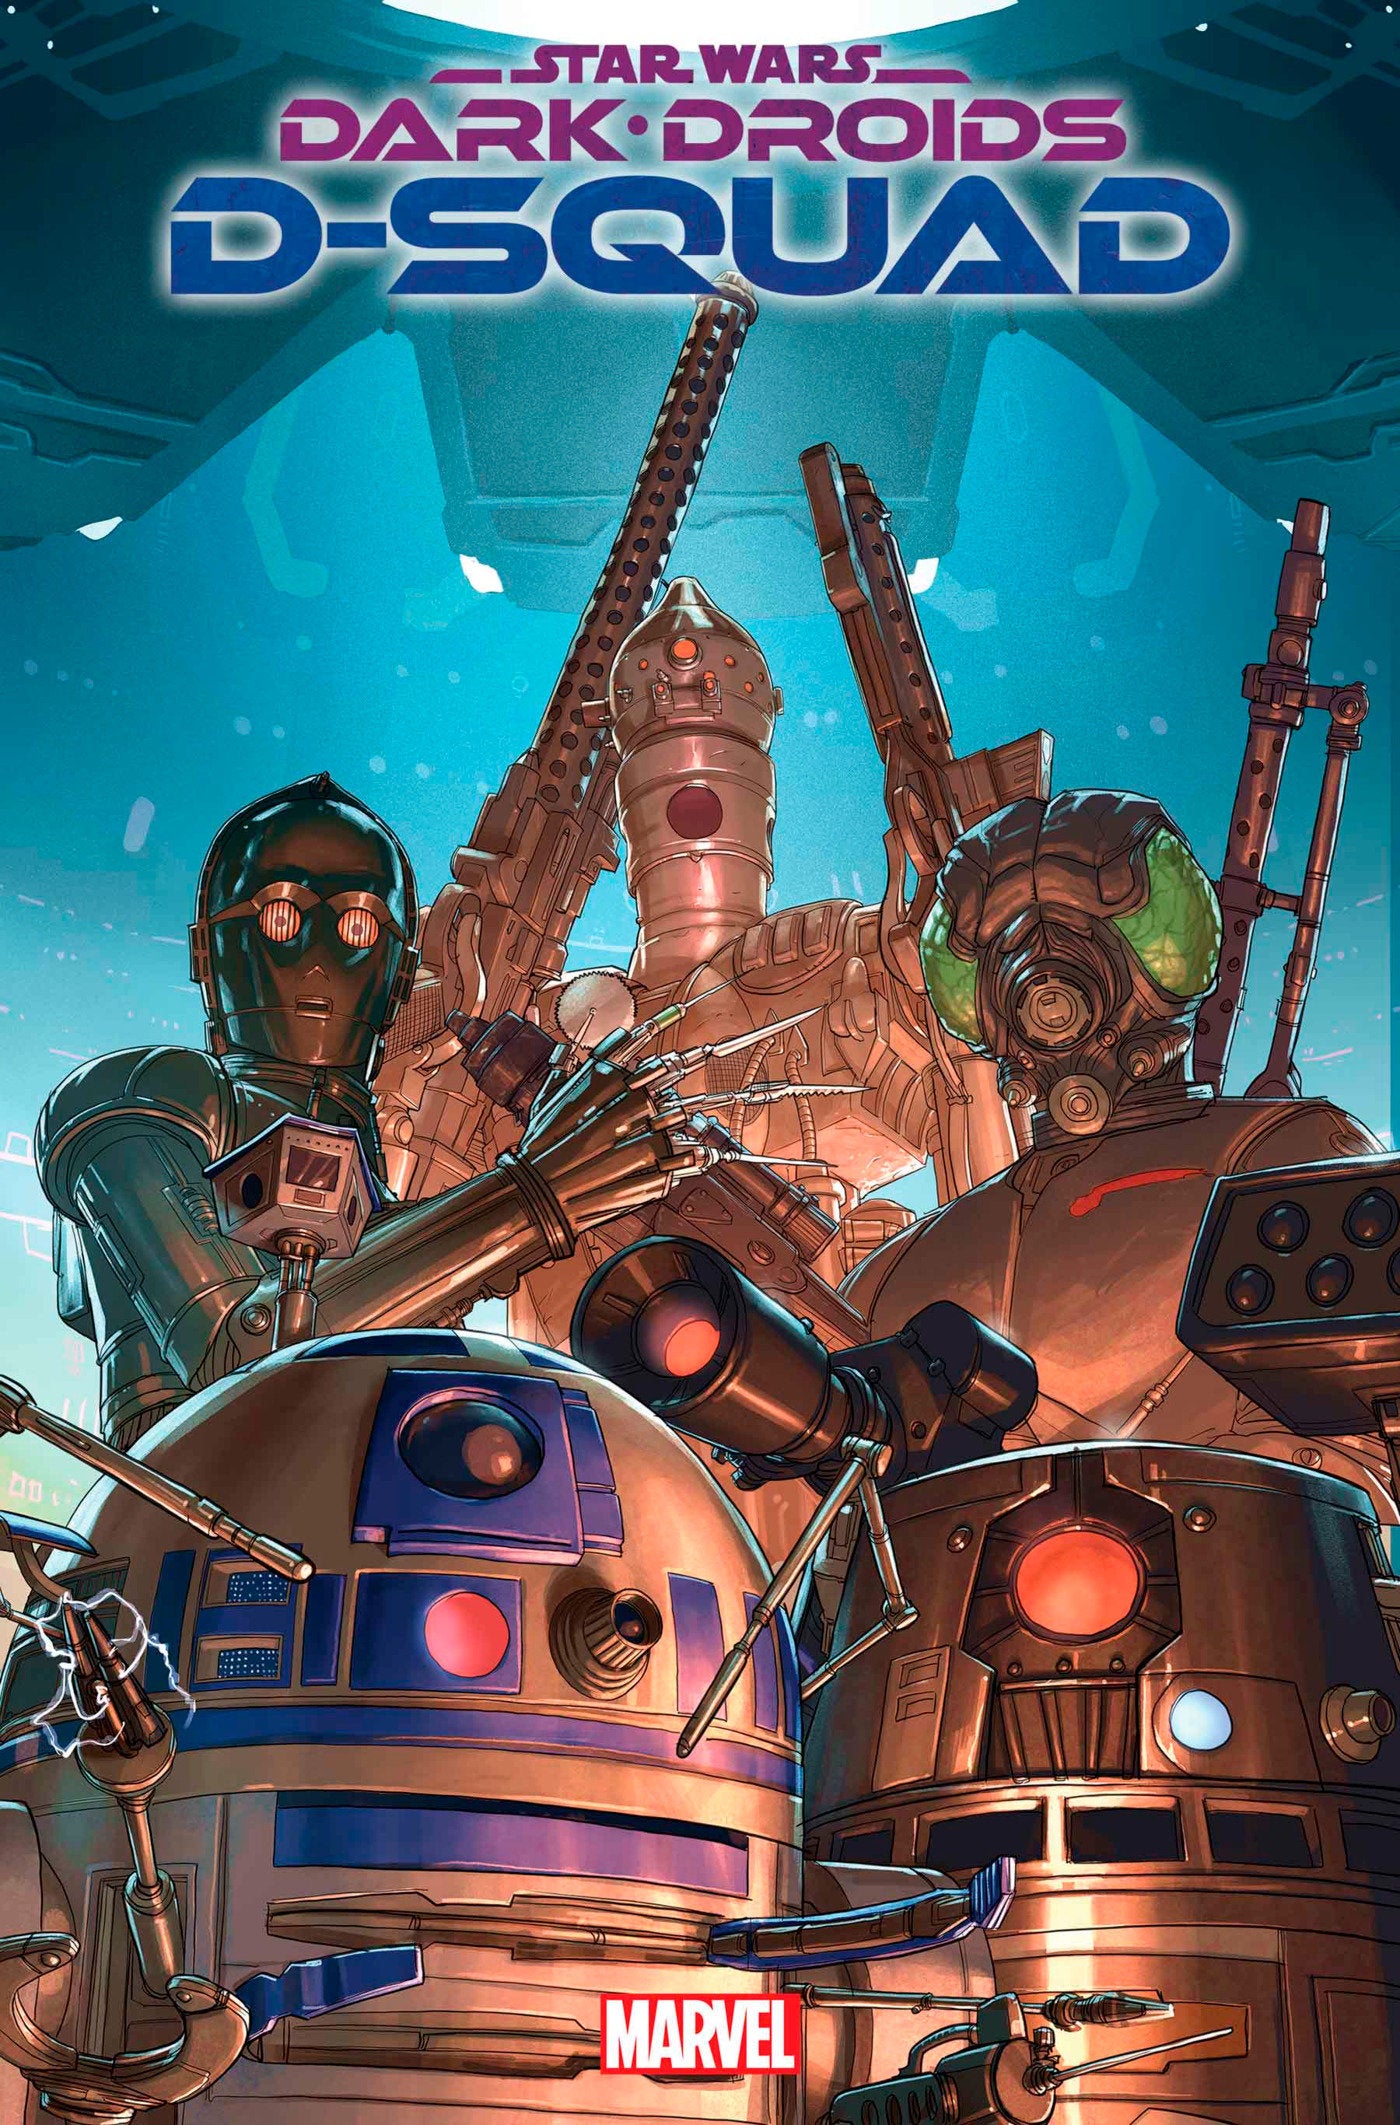 Star Wars: Dark Droids - D-Squad 4 [Dd] | Game Master's Emporium (The New GME)